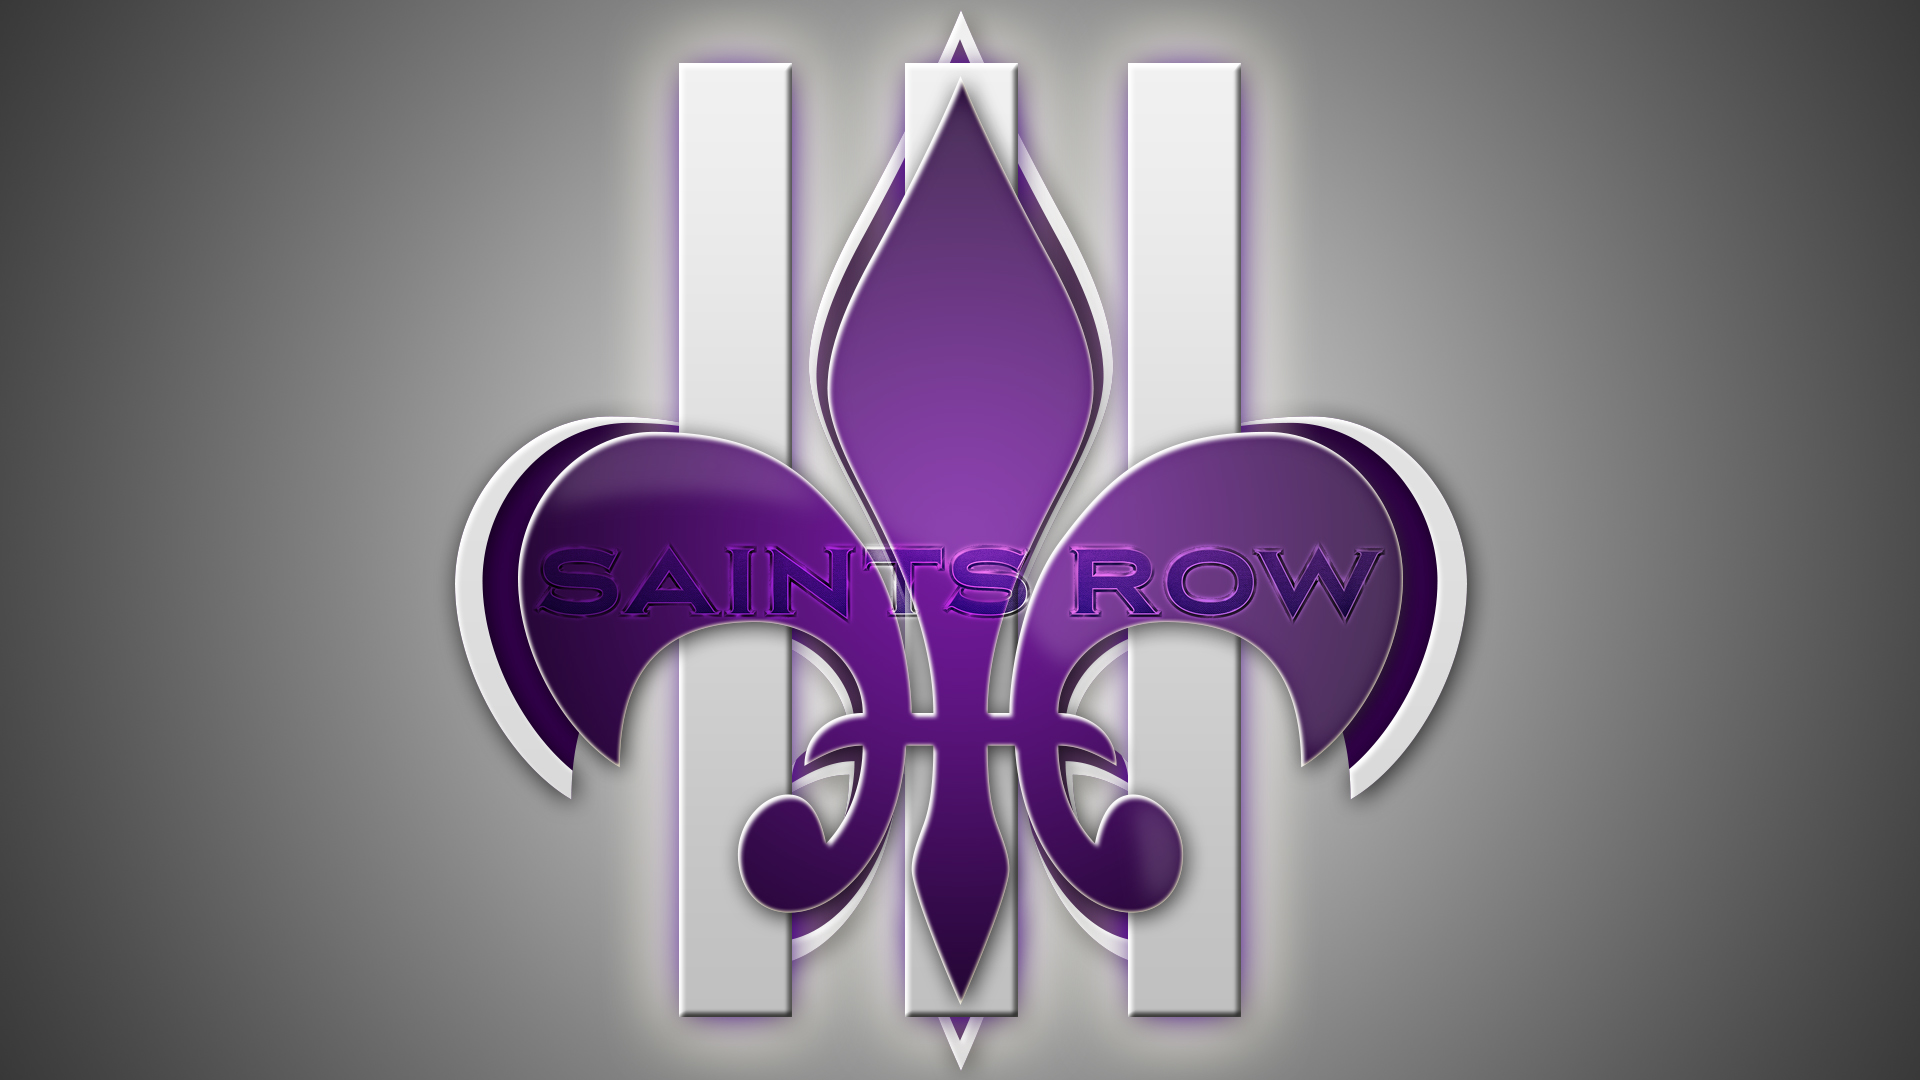 free download saints row 3 ps5